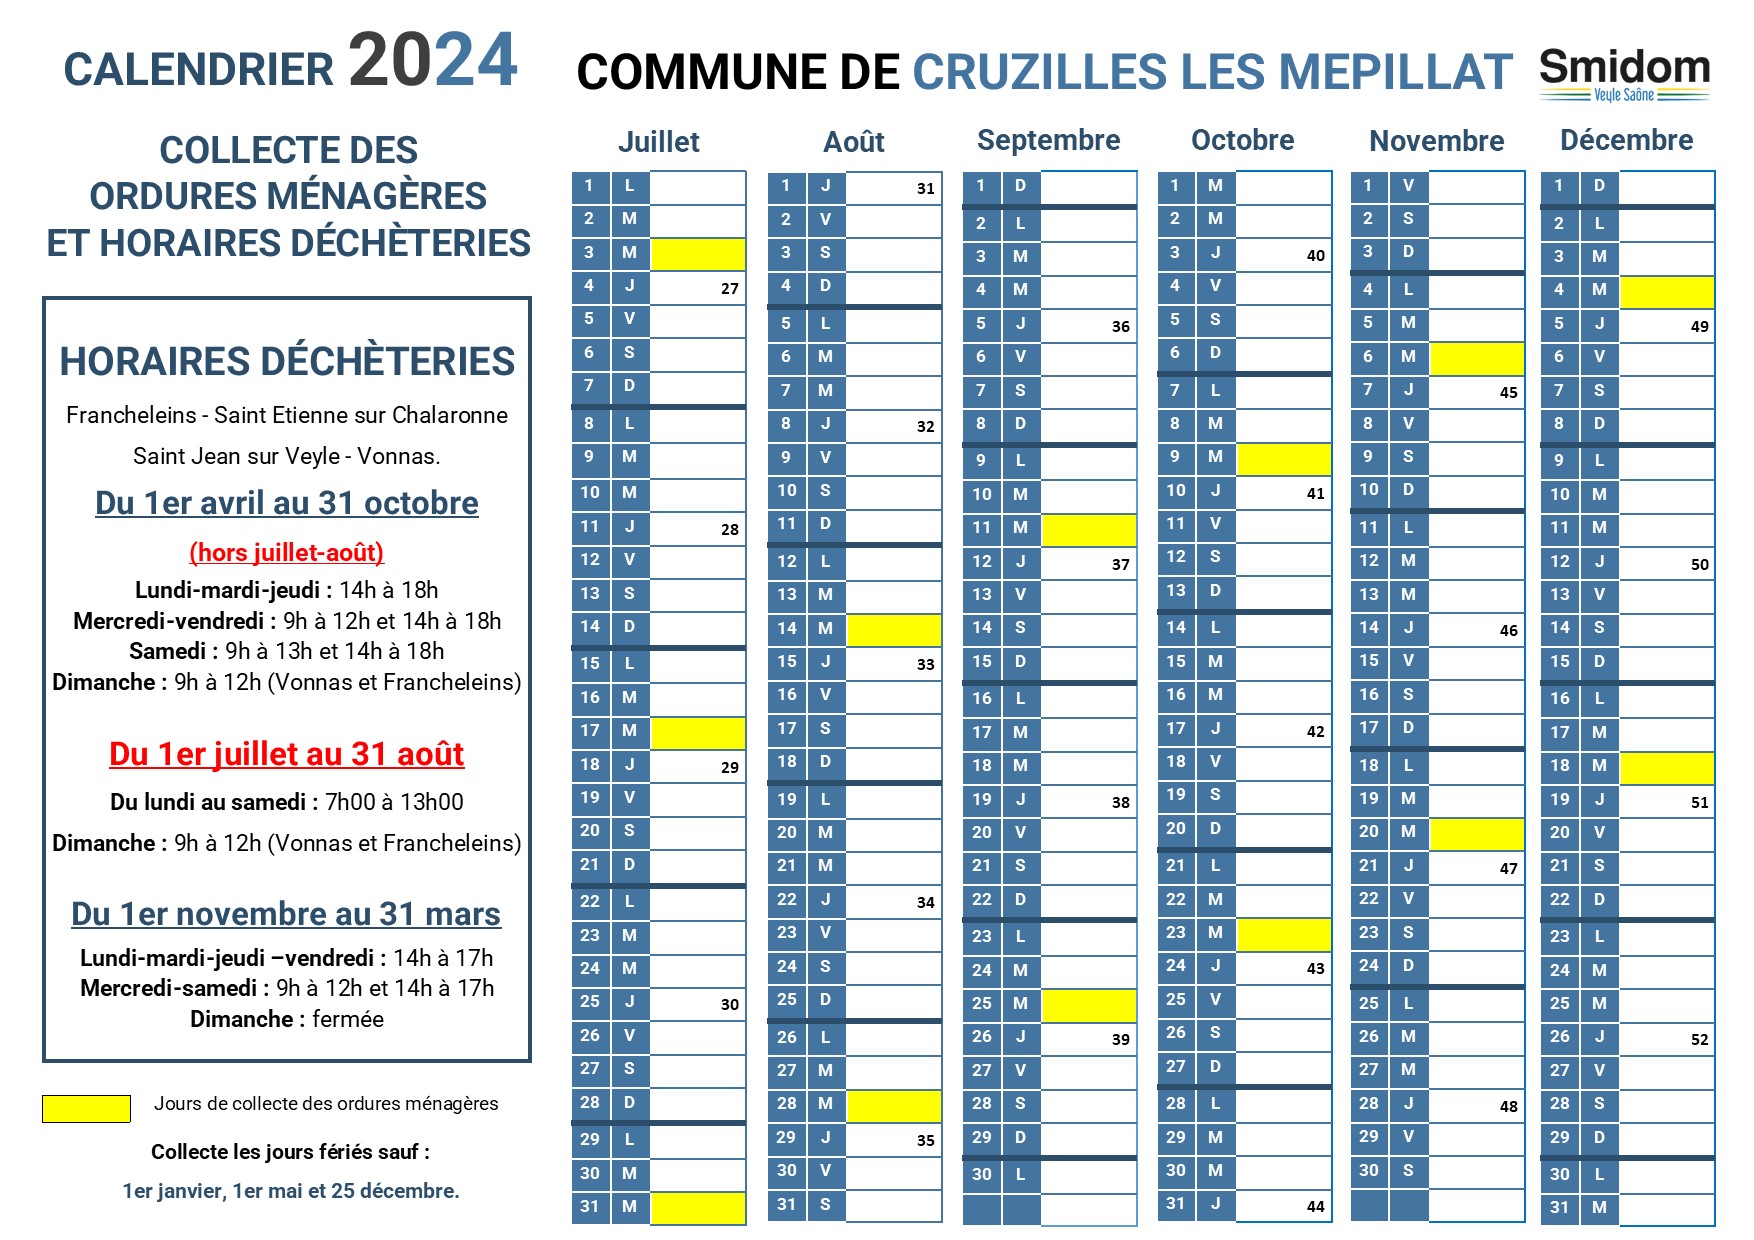 CRUZILLES LES MEPILLAT - Calendrier 2024 - 2.jpg